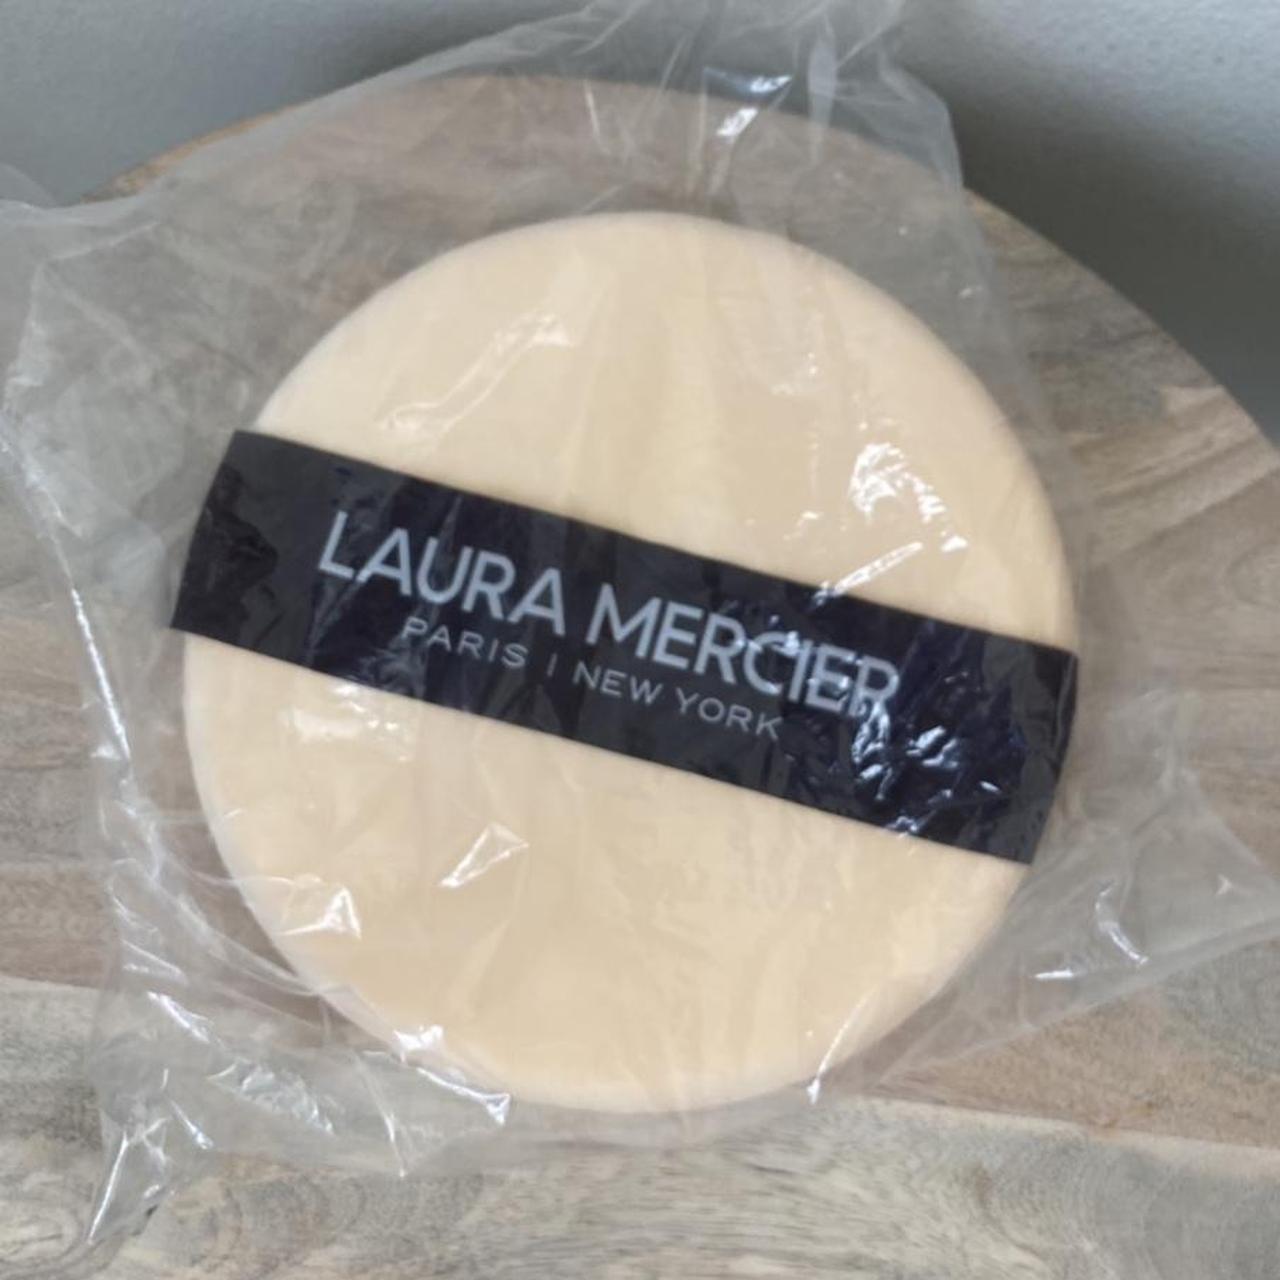 Product Image 1 - New giant Laura Mercier powder